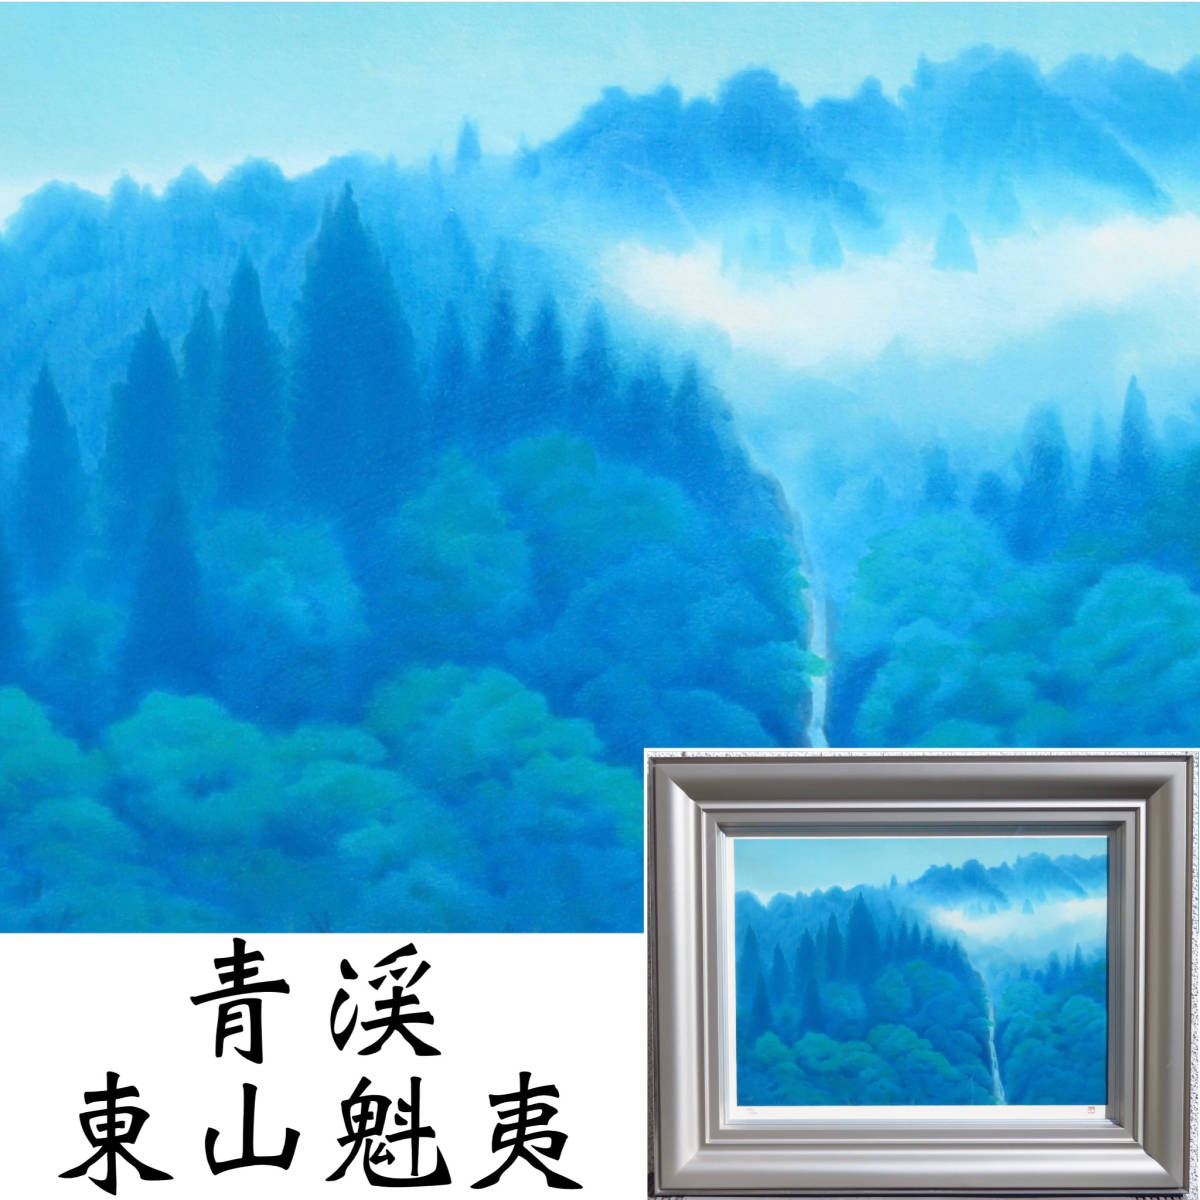 [SAKURAYA] Authenticity Guaranteed Artwork [Seikei/Higashiyama Kaii] Lithograph Limited to 250 copies Landscape Painting Art Artist Artist Inscription Co-seal Antique 75.3 x 61.2, artwork, print, lithograph, lithograph